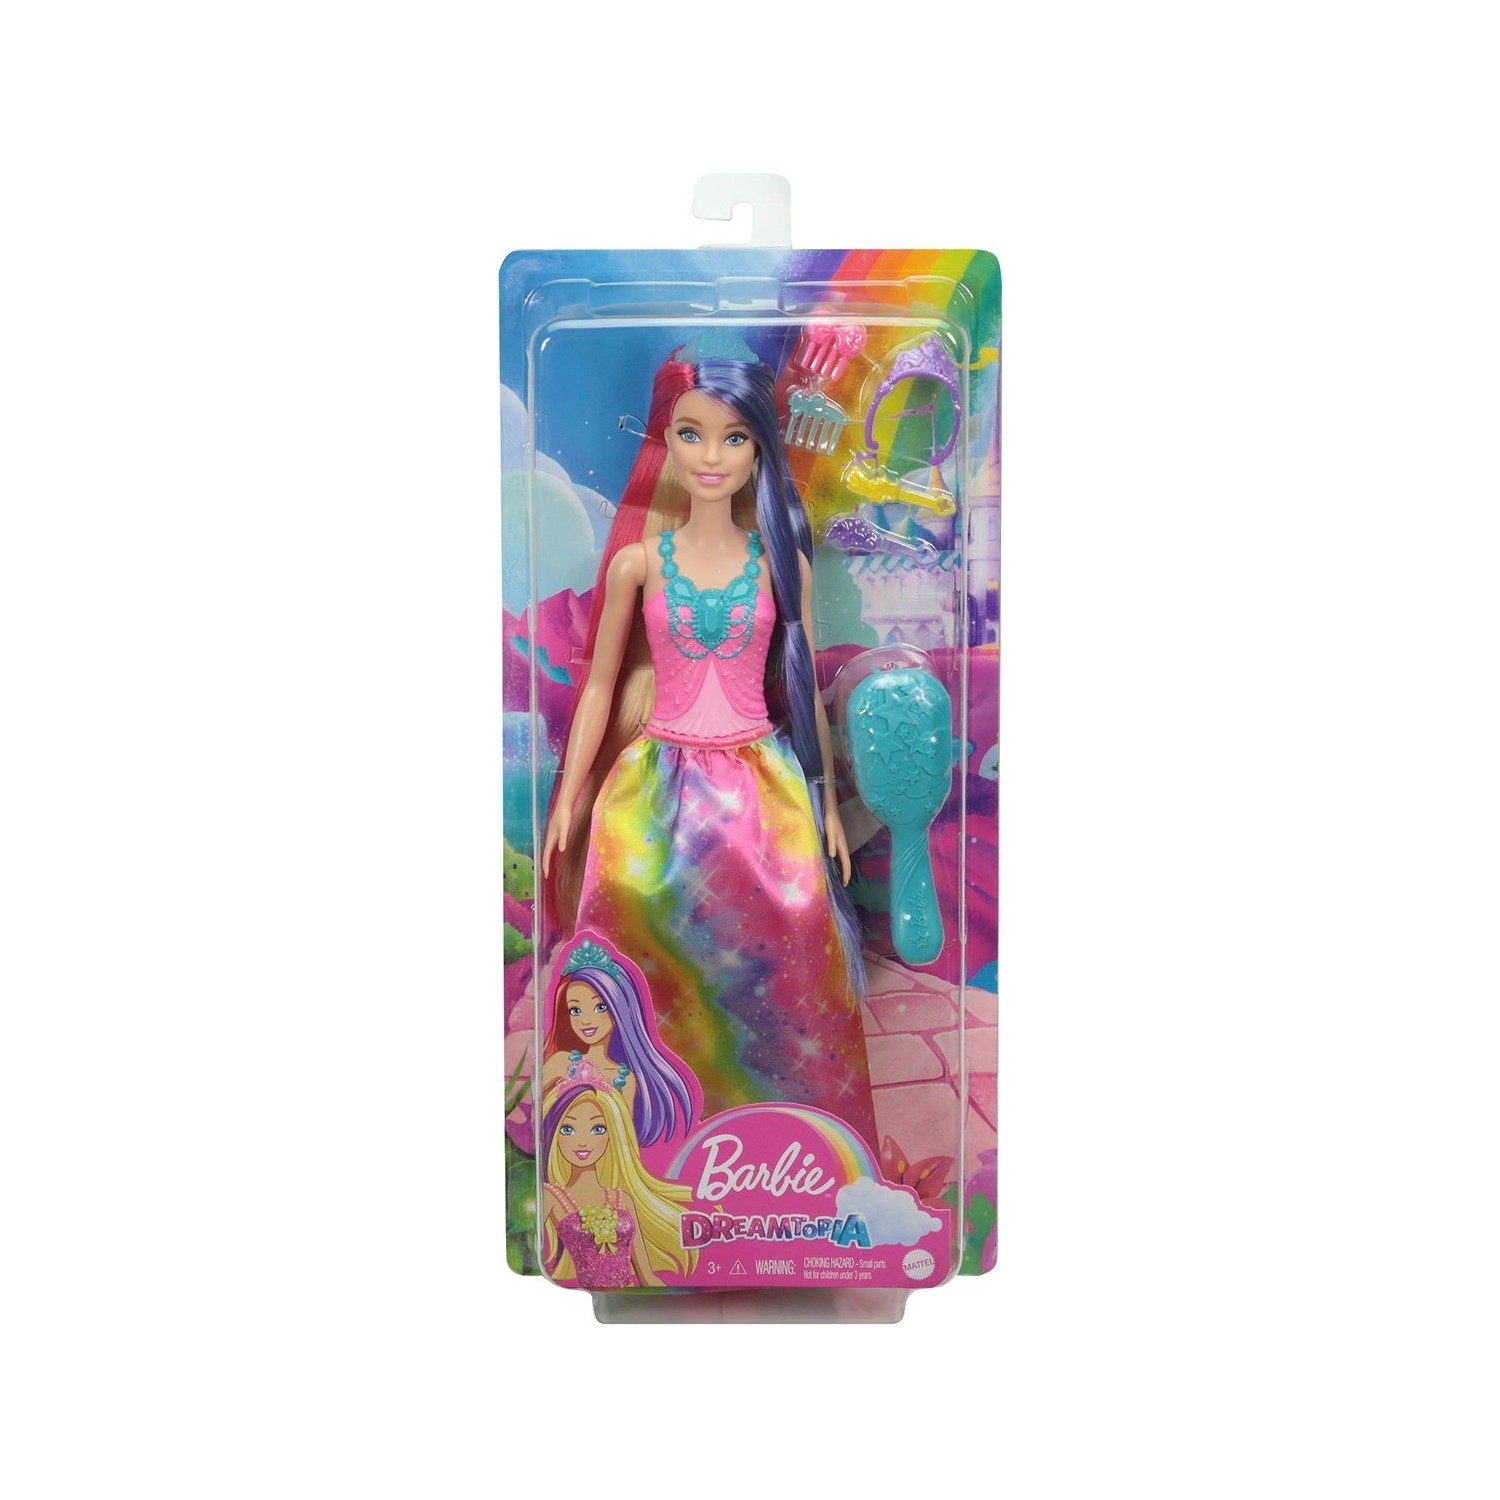 Кукла Barbie Barbie Dreamtopia Dreamland GTF37 кукла barbie дримтопия с аксессуарами 30 3 см gtg00 фиолетовый